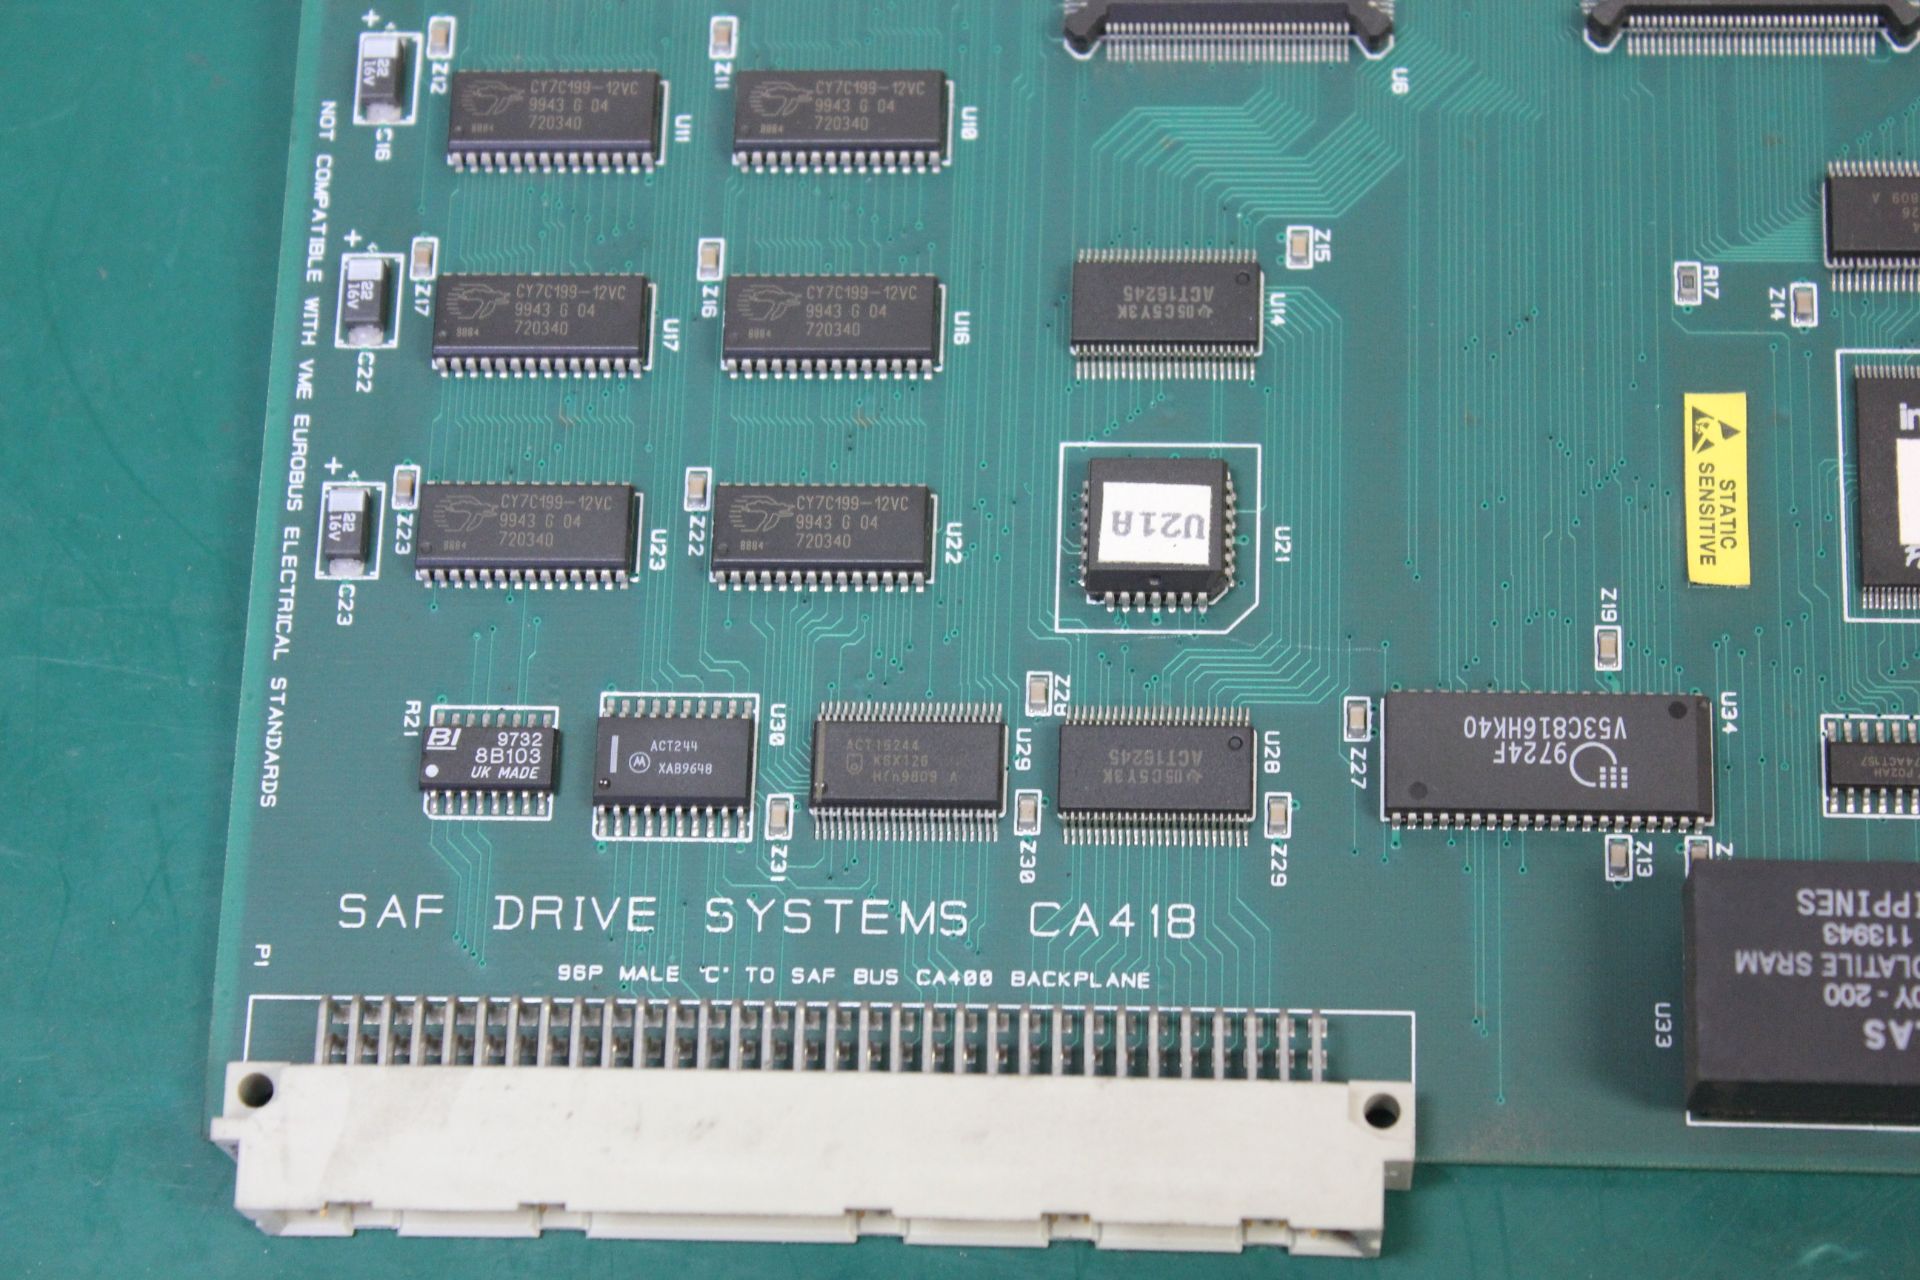 SAF DRIVE SYSTEMS CA418 MULTI PROCESSOR CPU CARD - Image 4 of 4